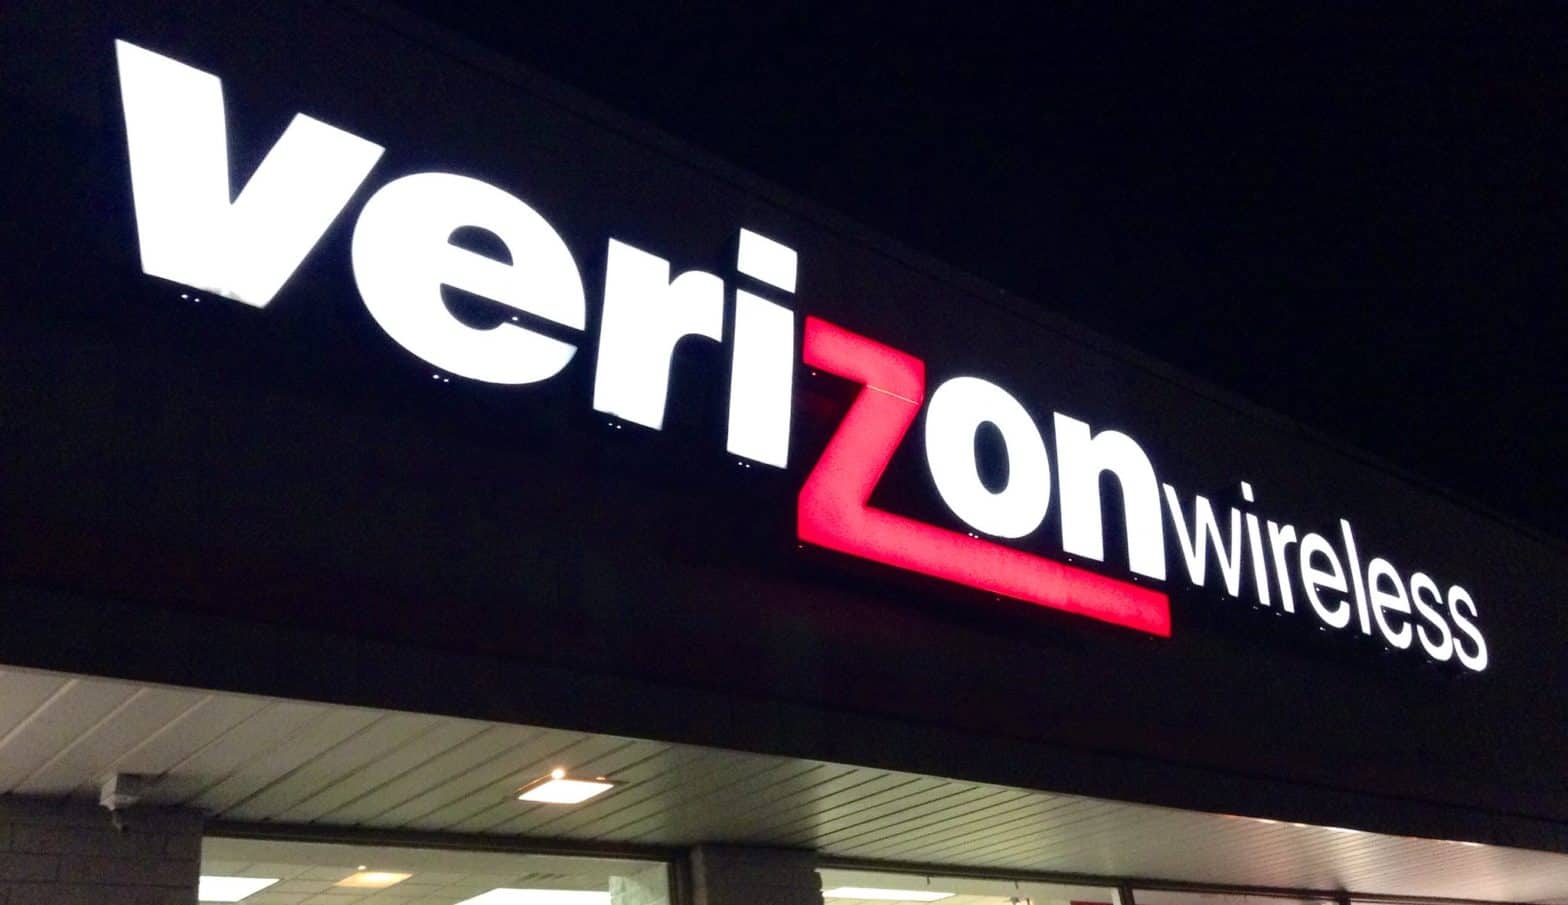 A branch of Verizon